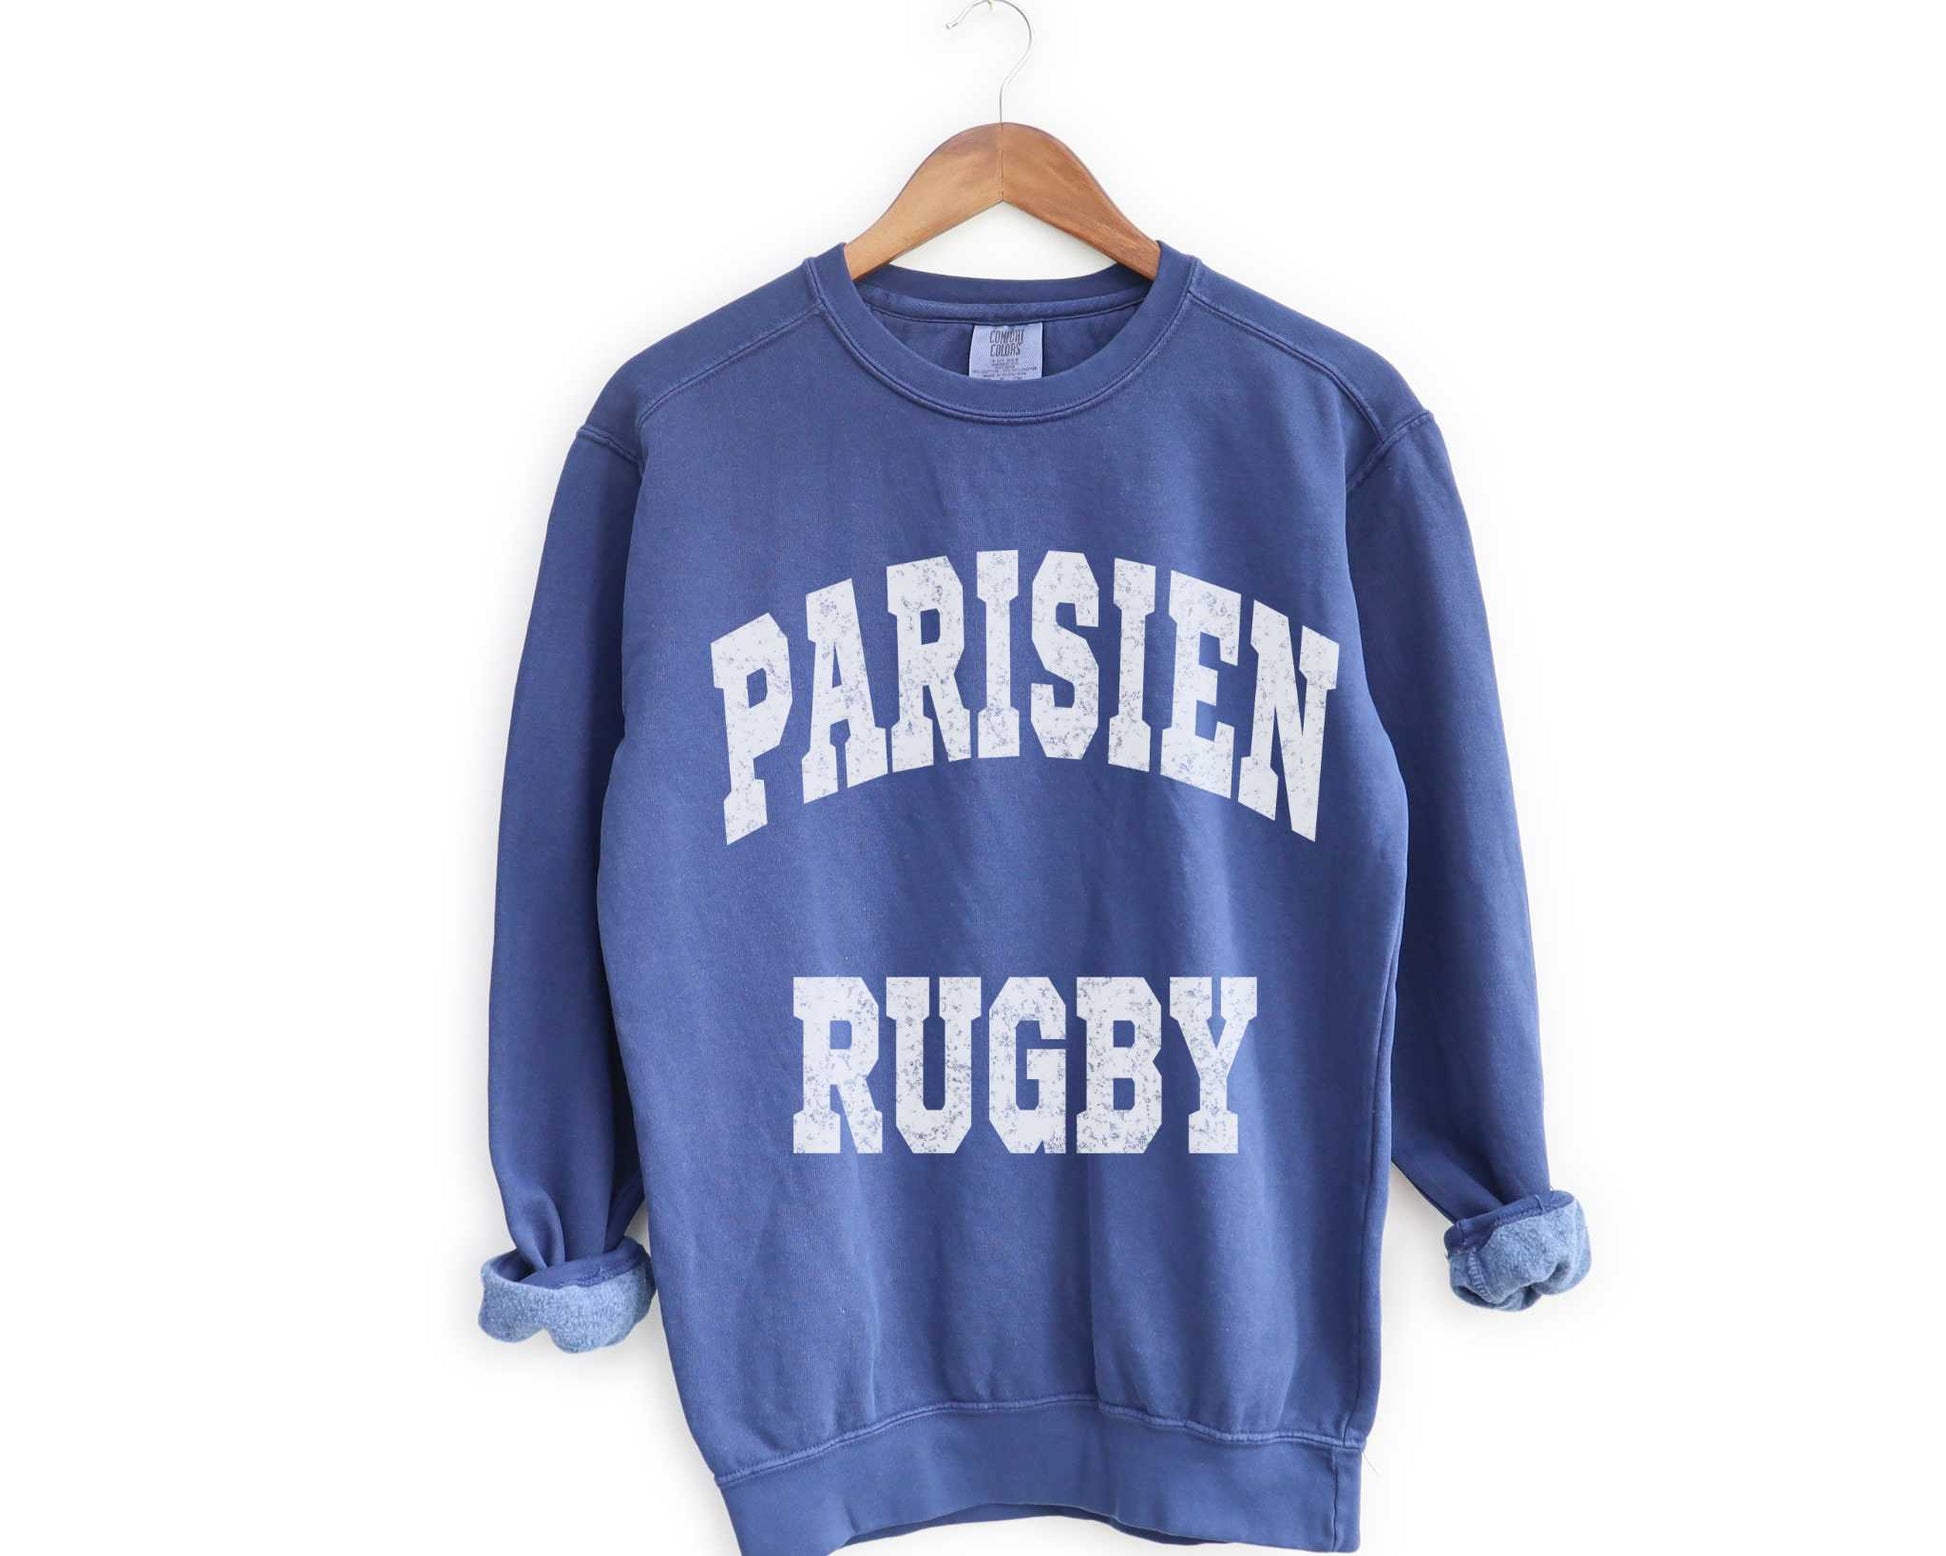 Parisien Rugby Sweatshirt in True Navy